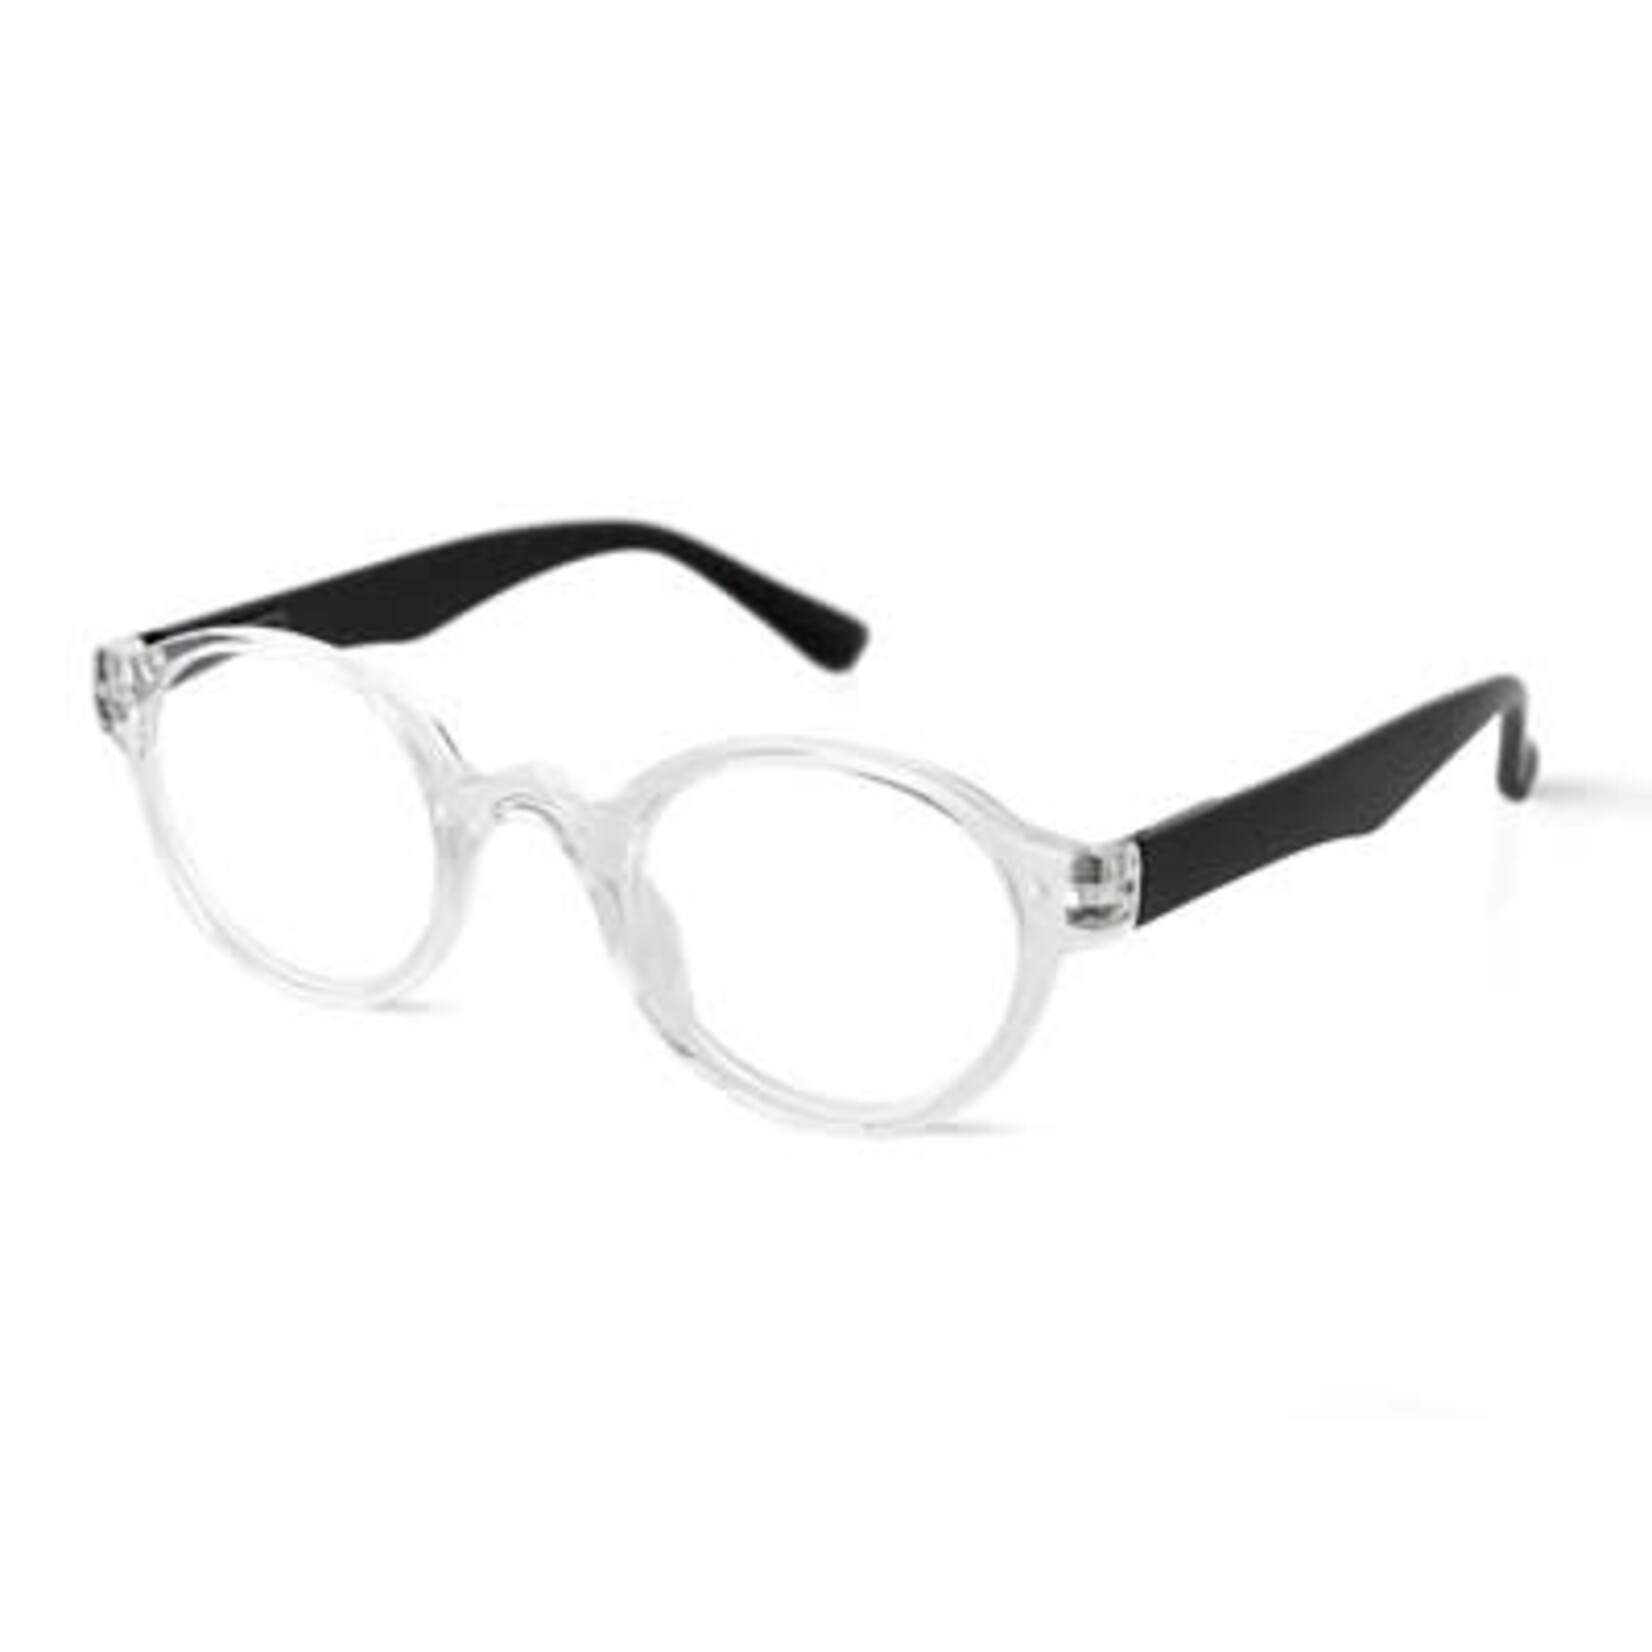 Optimum Optical Soho Clear Reading Glasses